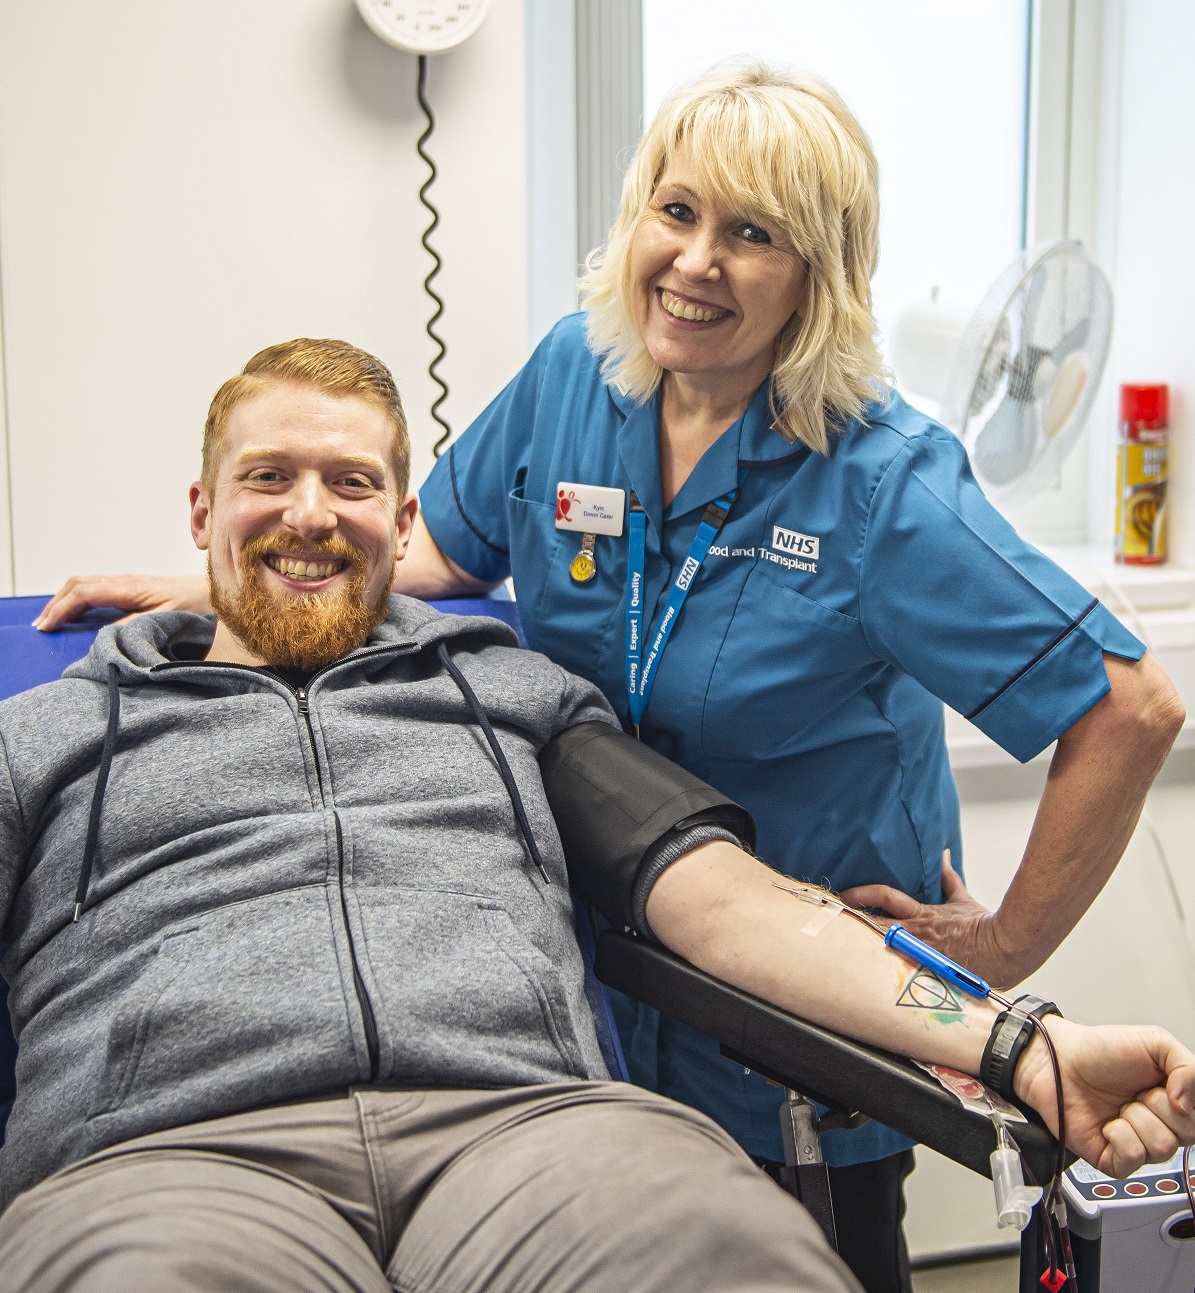 David Pulman and a Blood Donation nurse pose for a photo as David donates